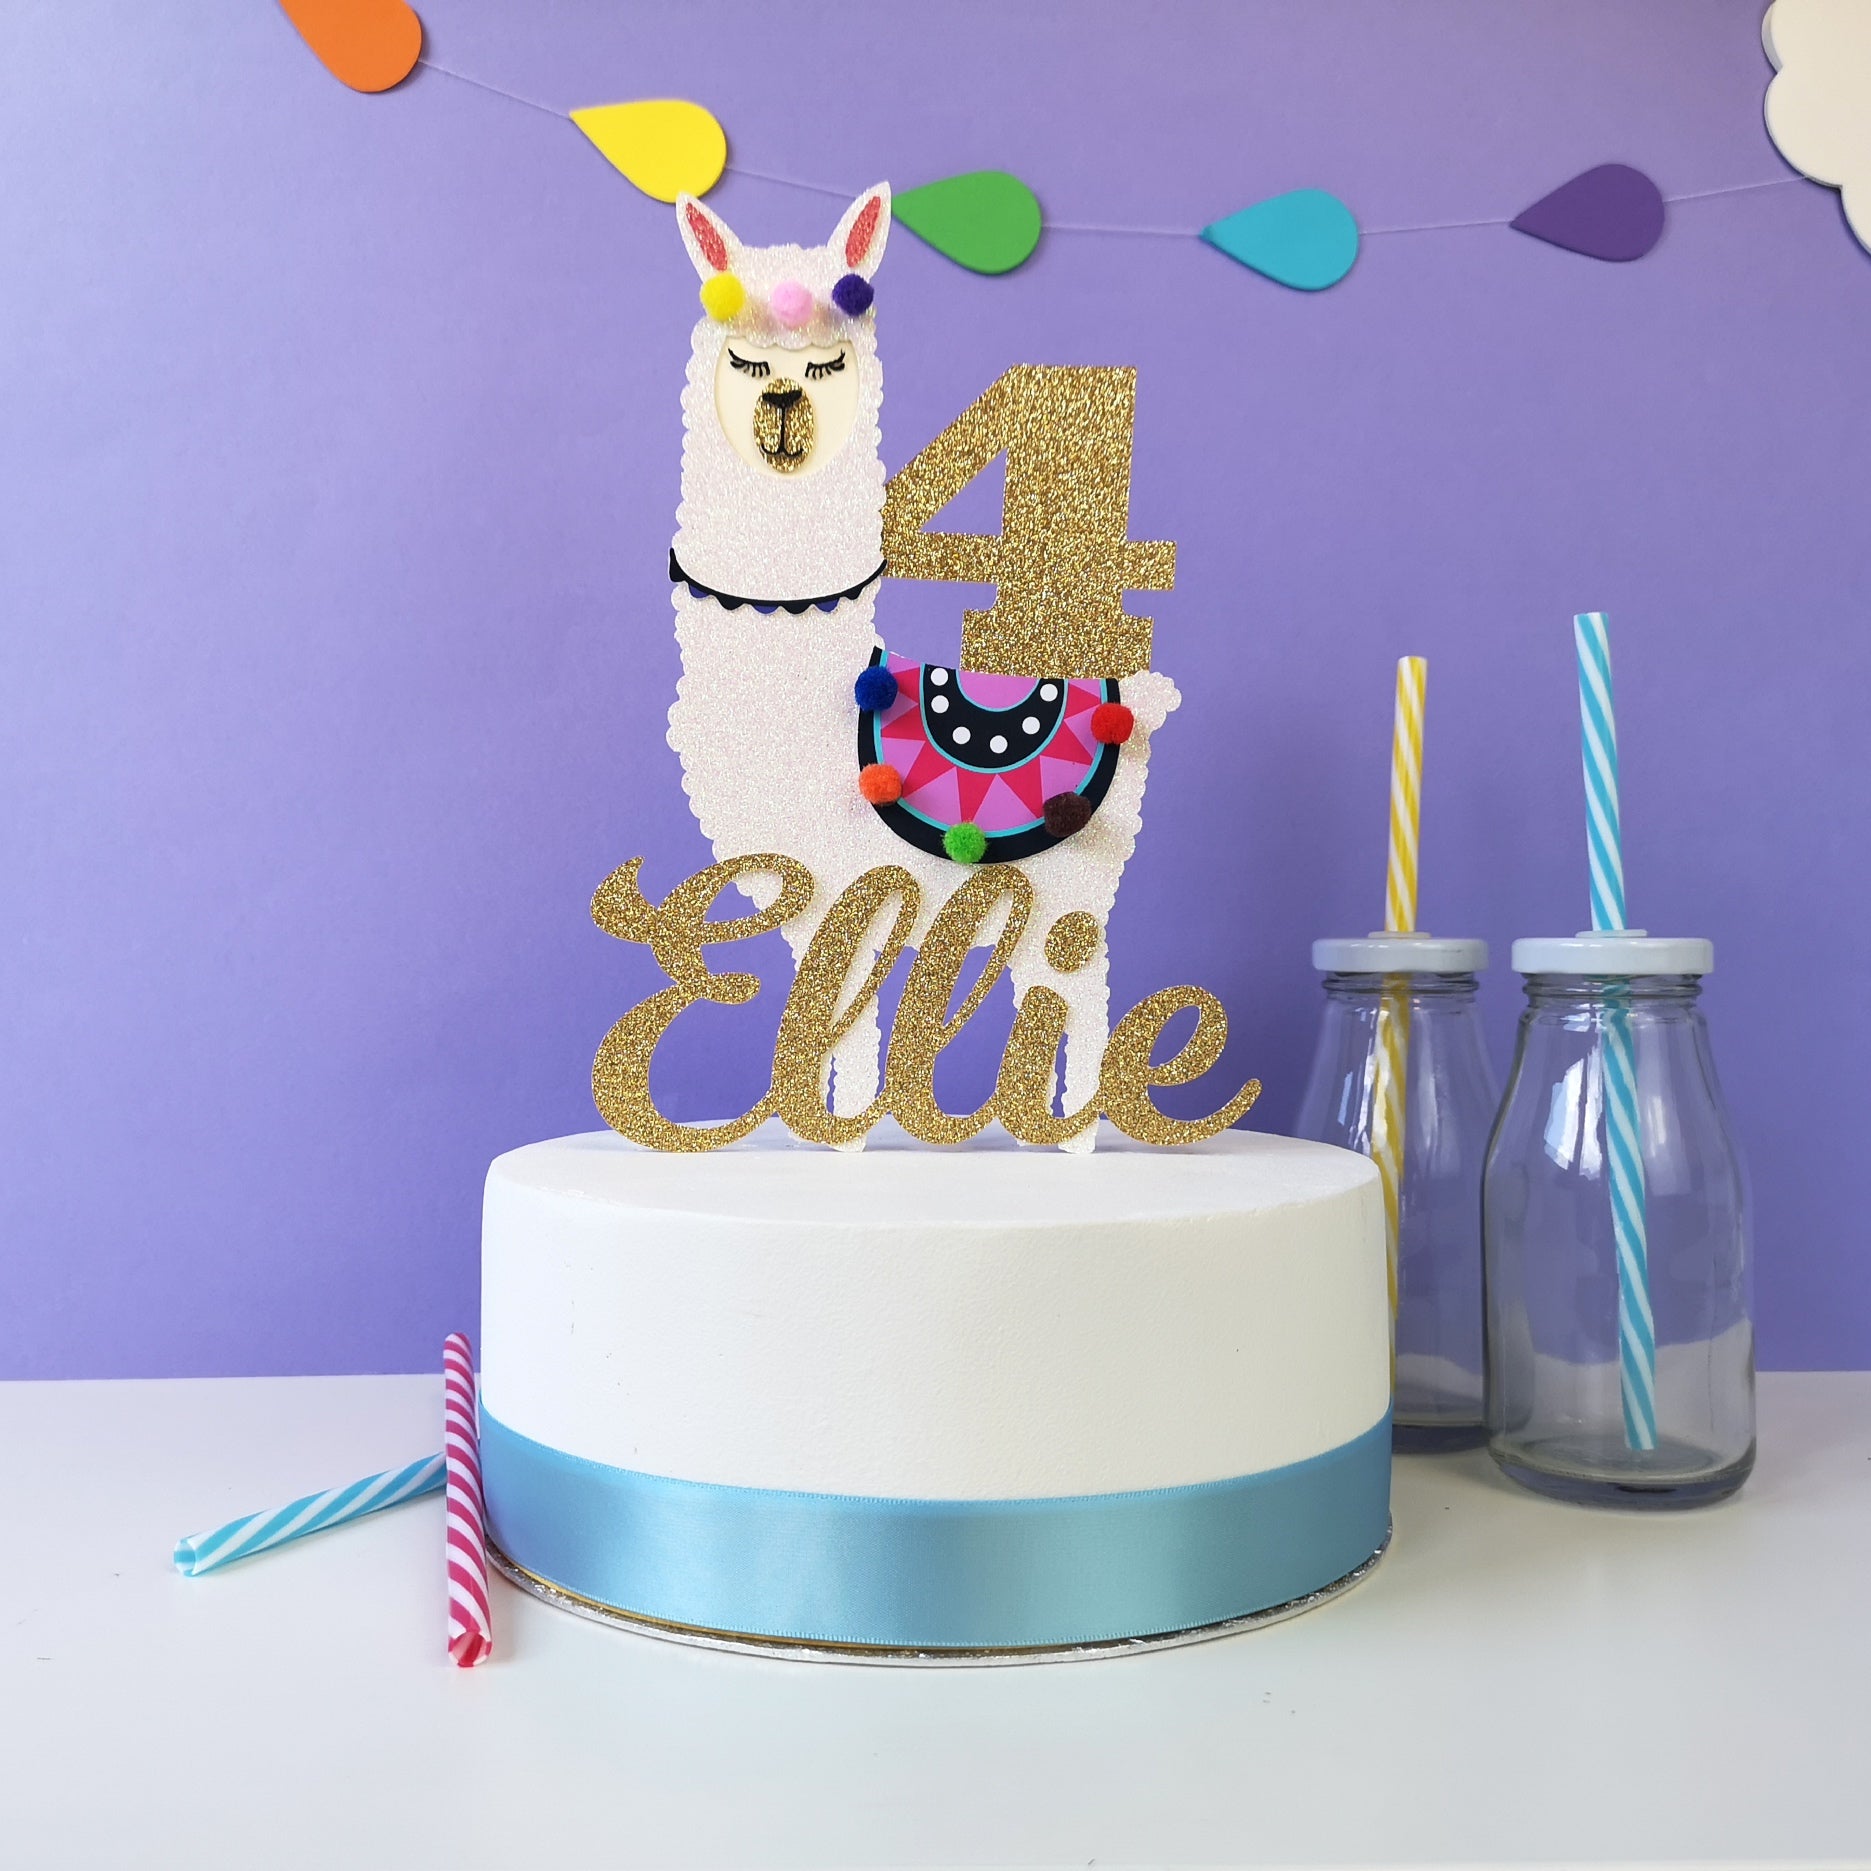 Llama Cake Topper - Perfect for Llama Parties